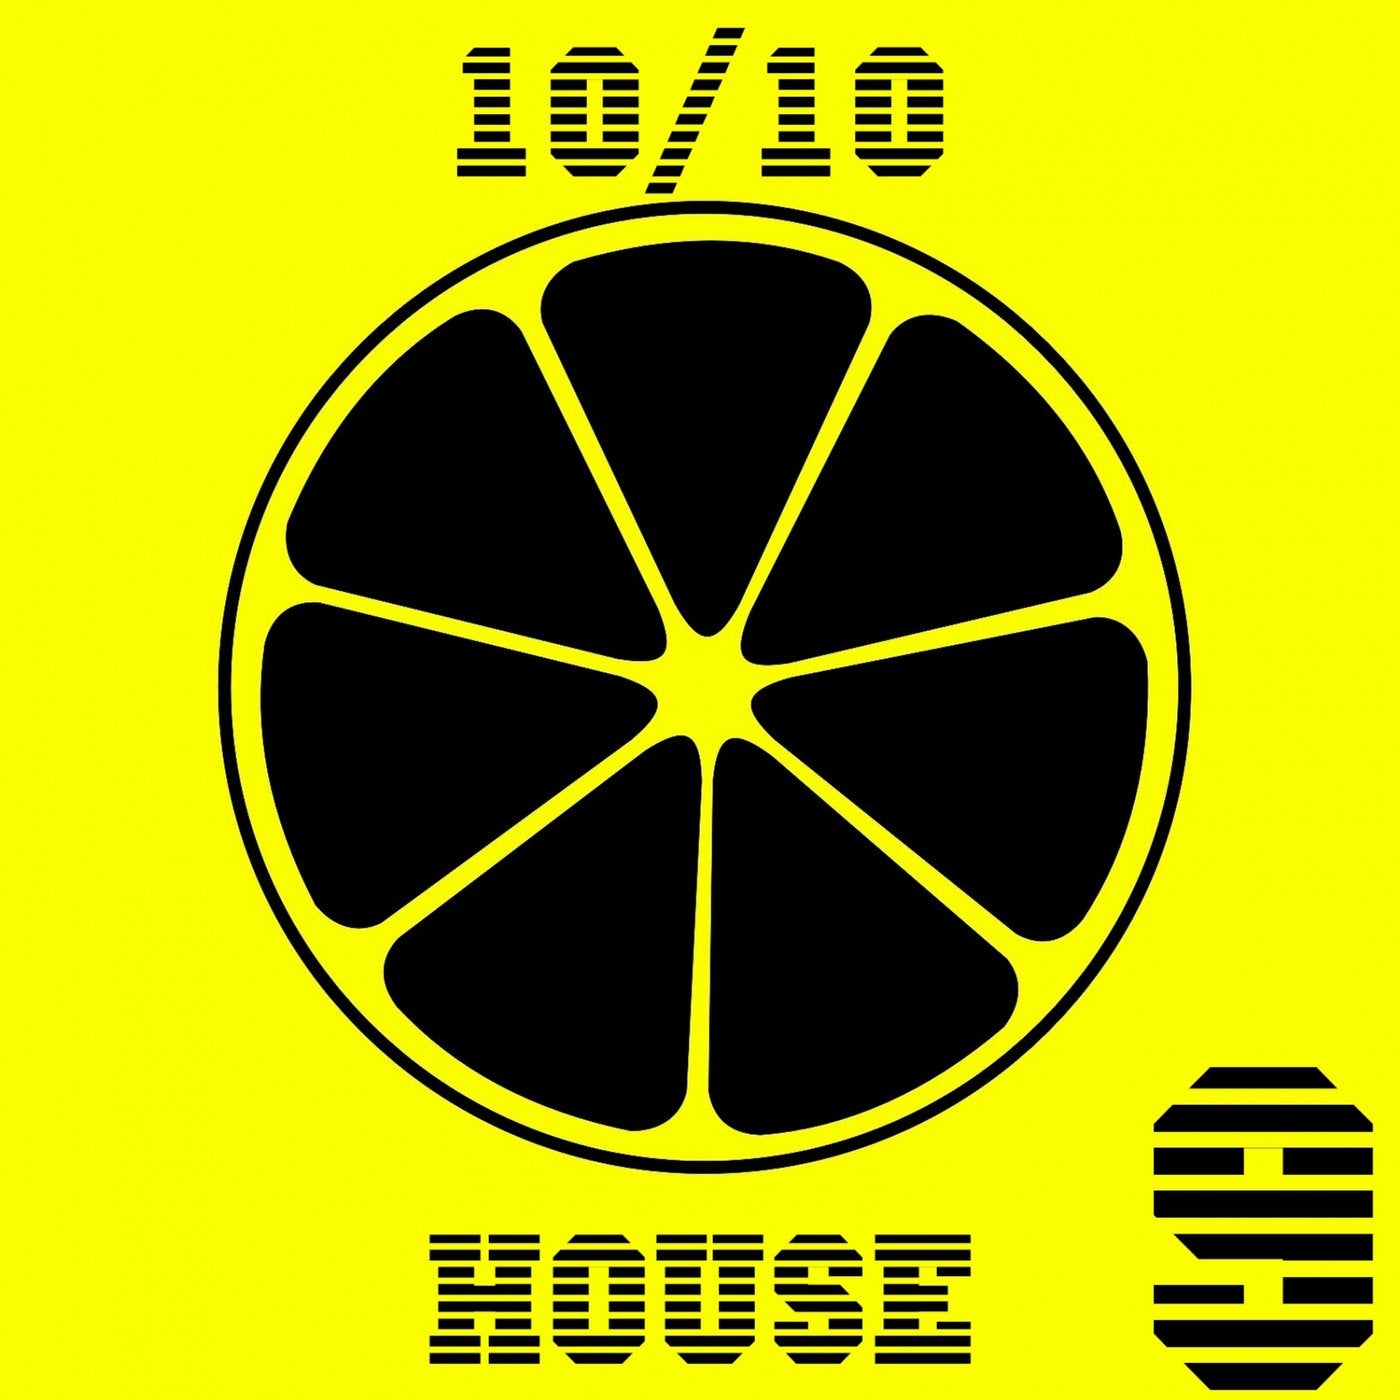 10/10 House, Vol. 9